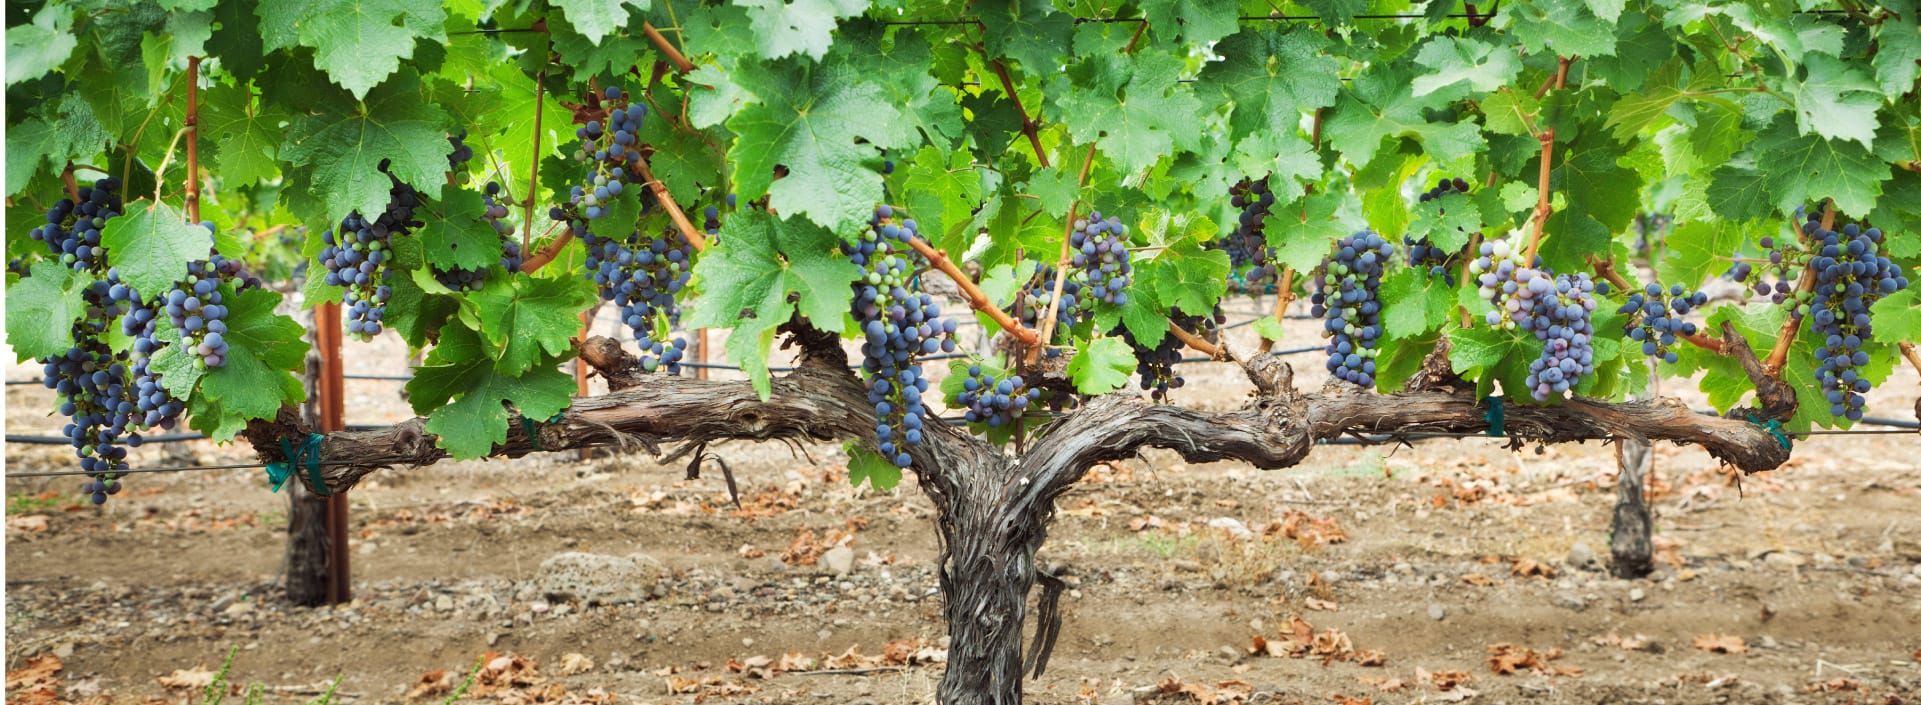 Wine grape in vineyard